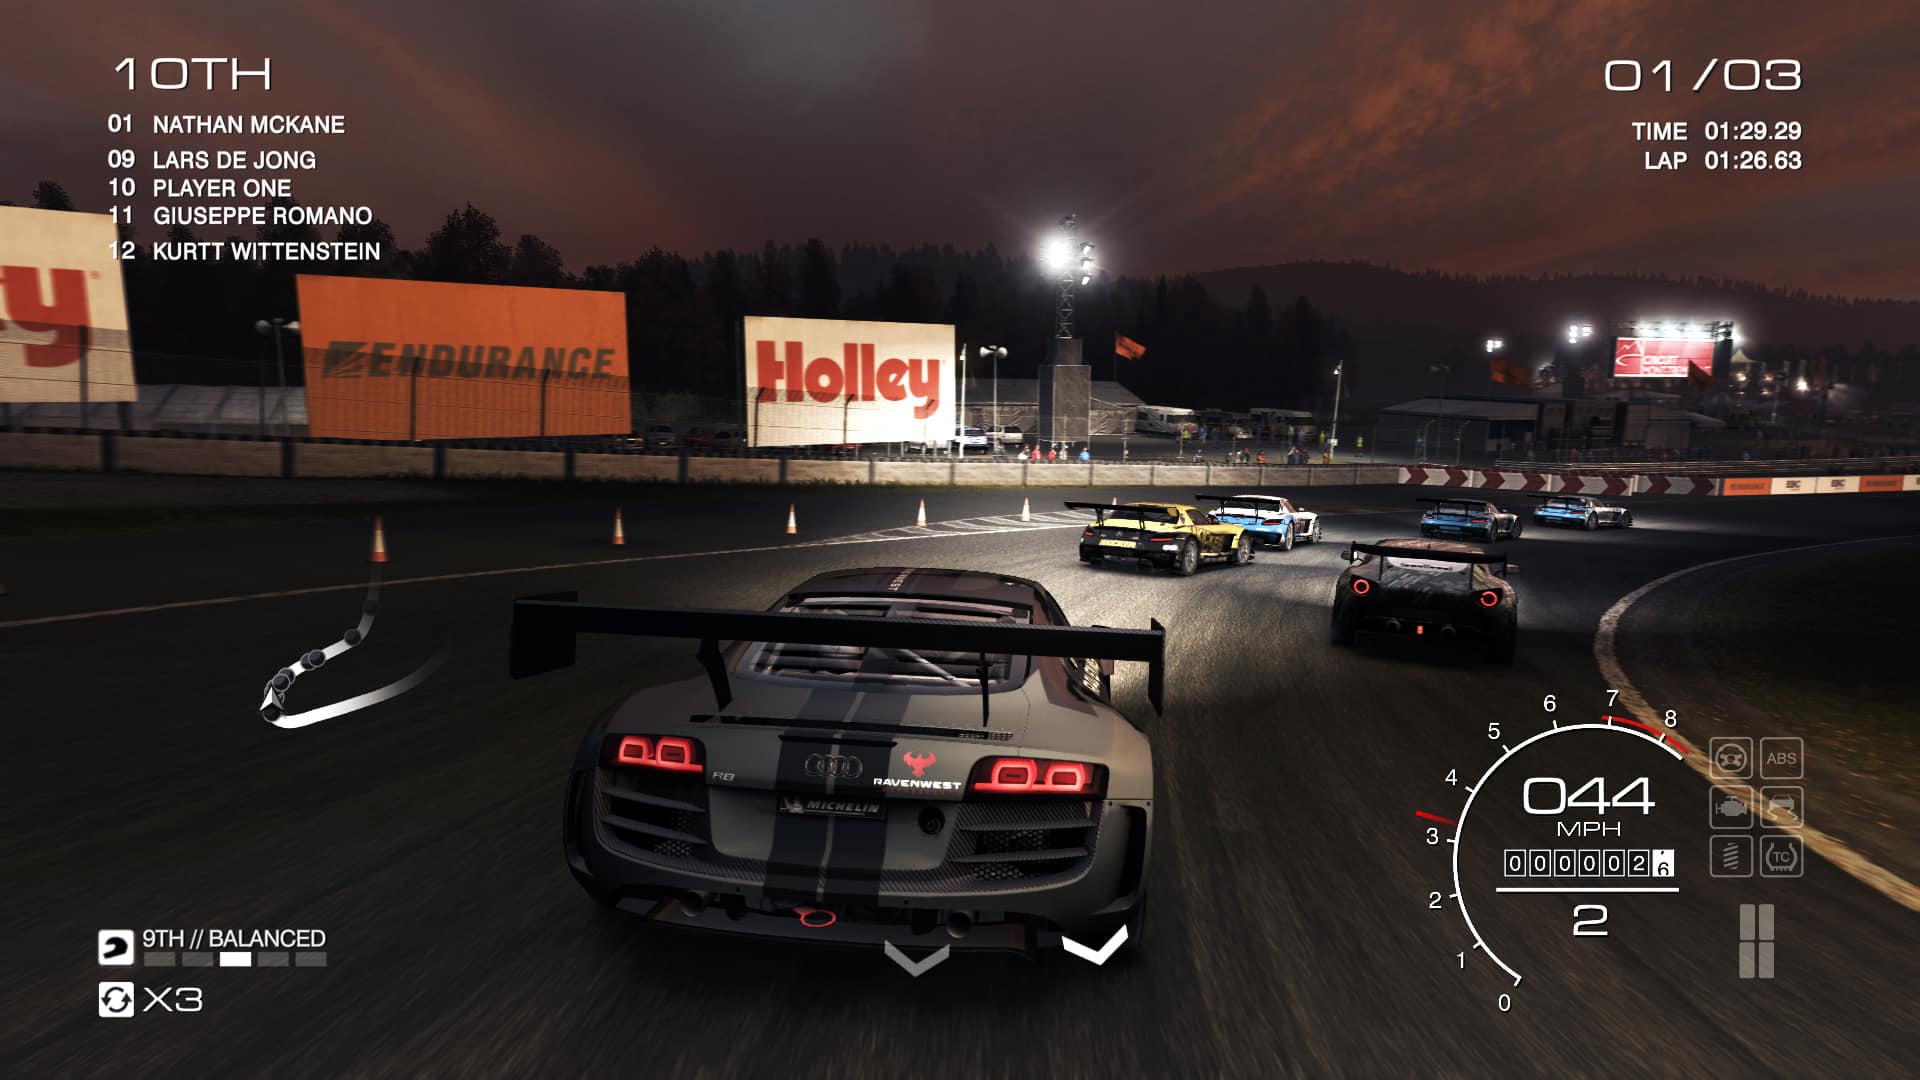 720p grid autosport images